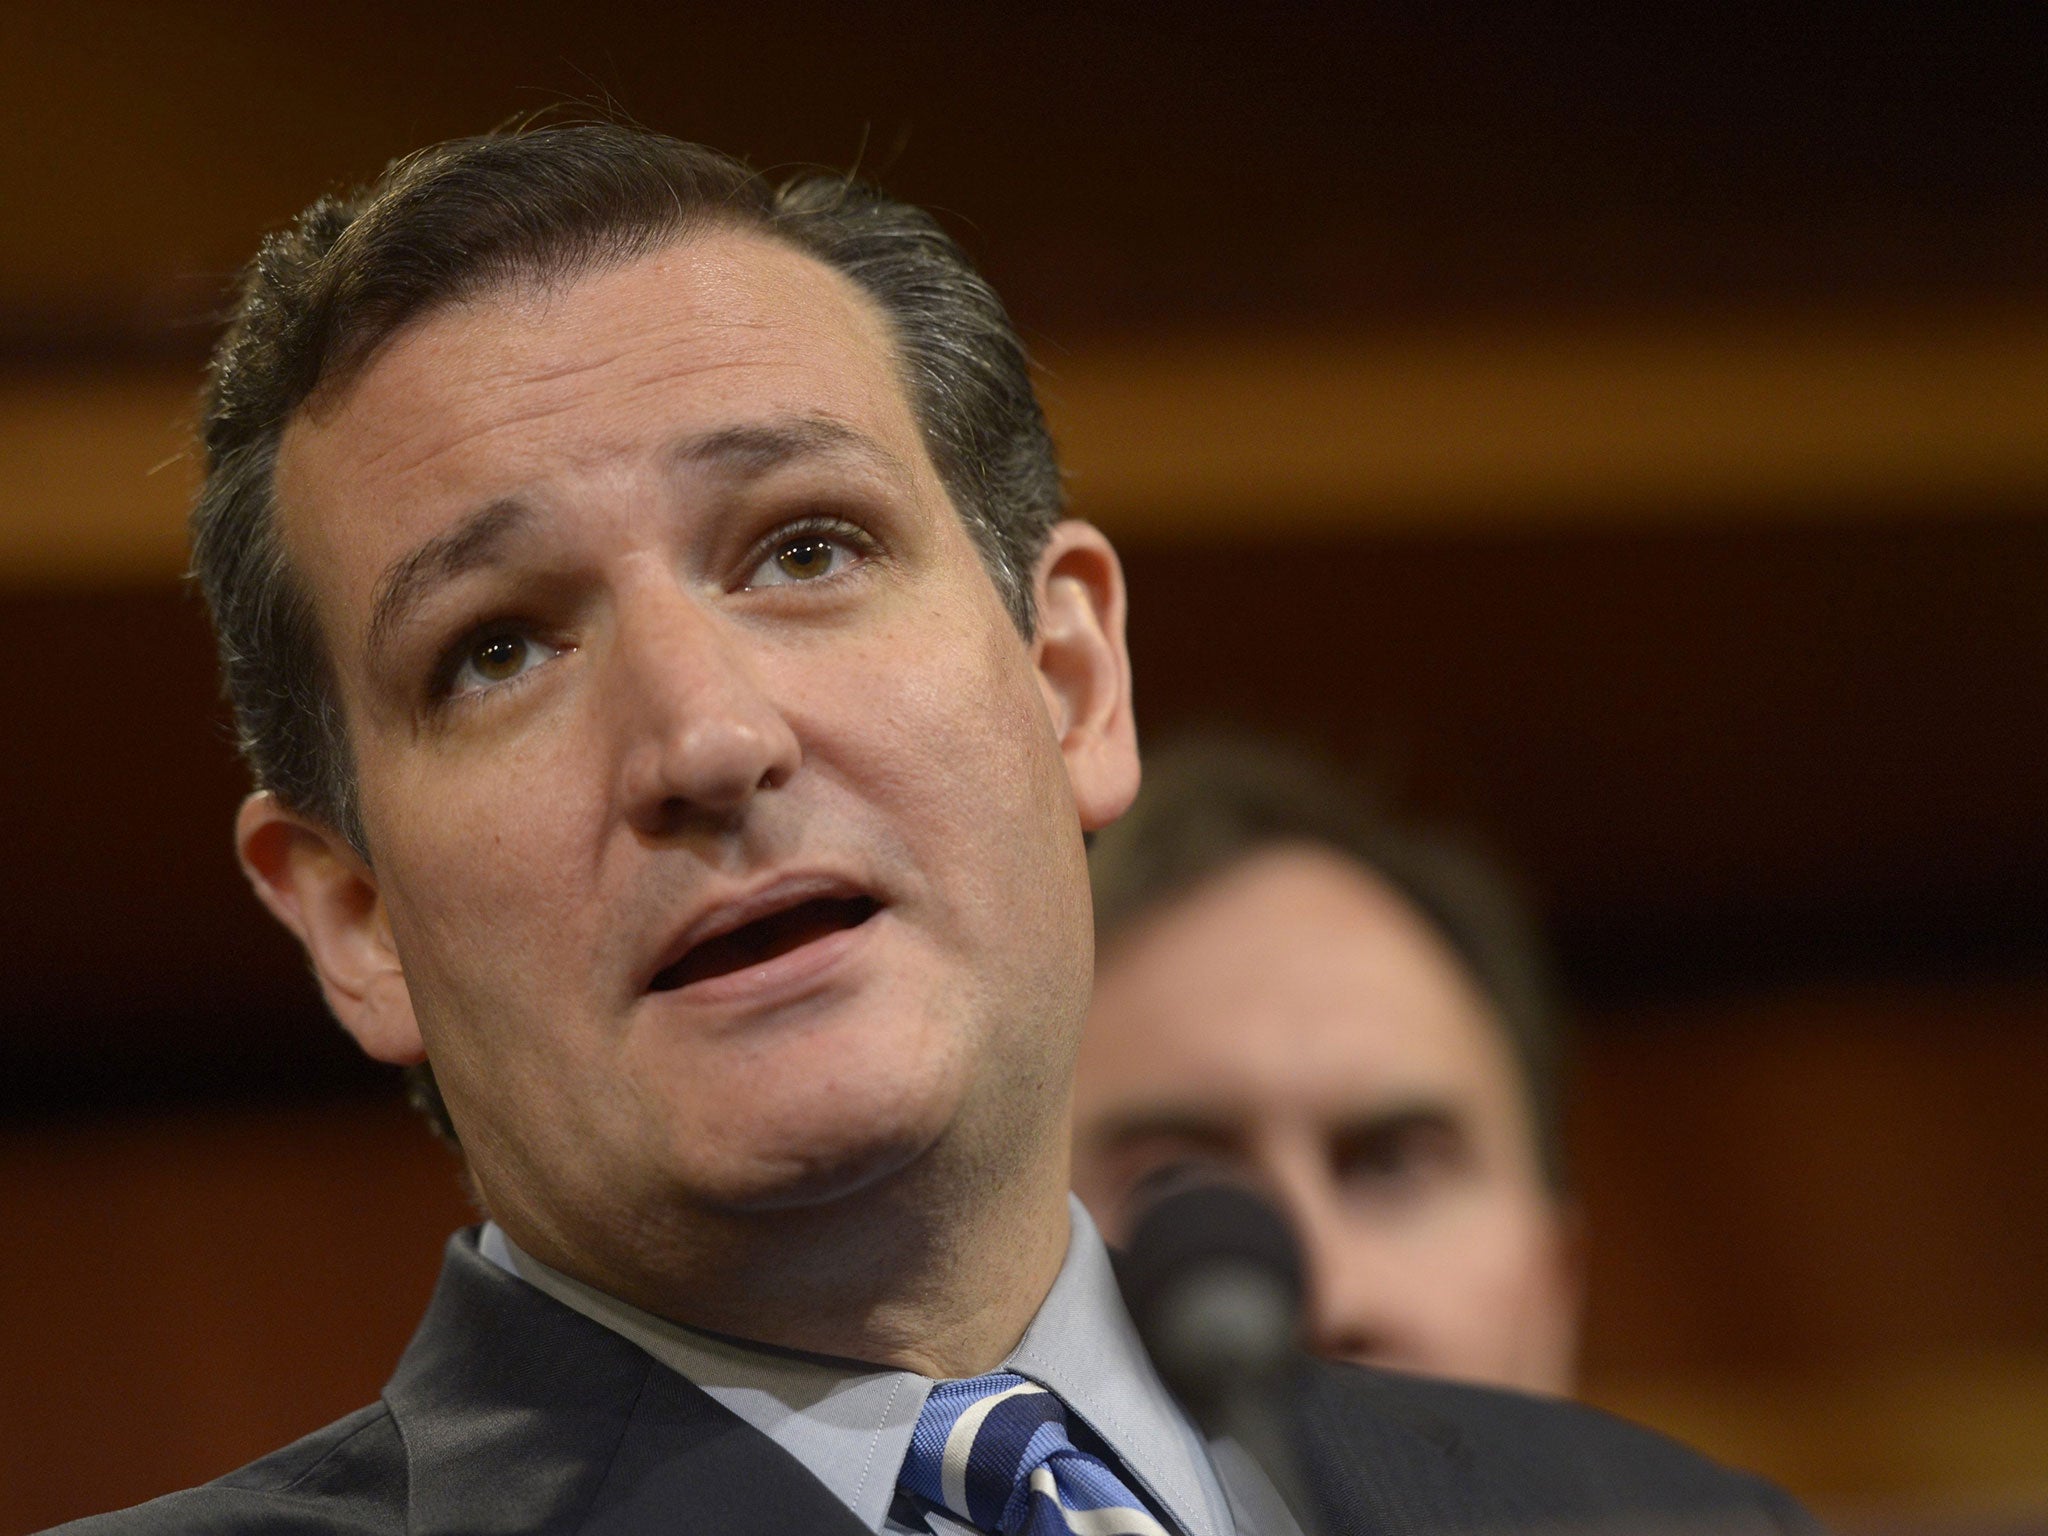 Texas Senator Ted Cruz has announced he is running for president in 2016